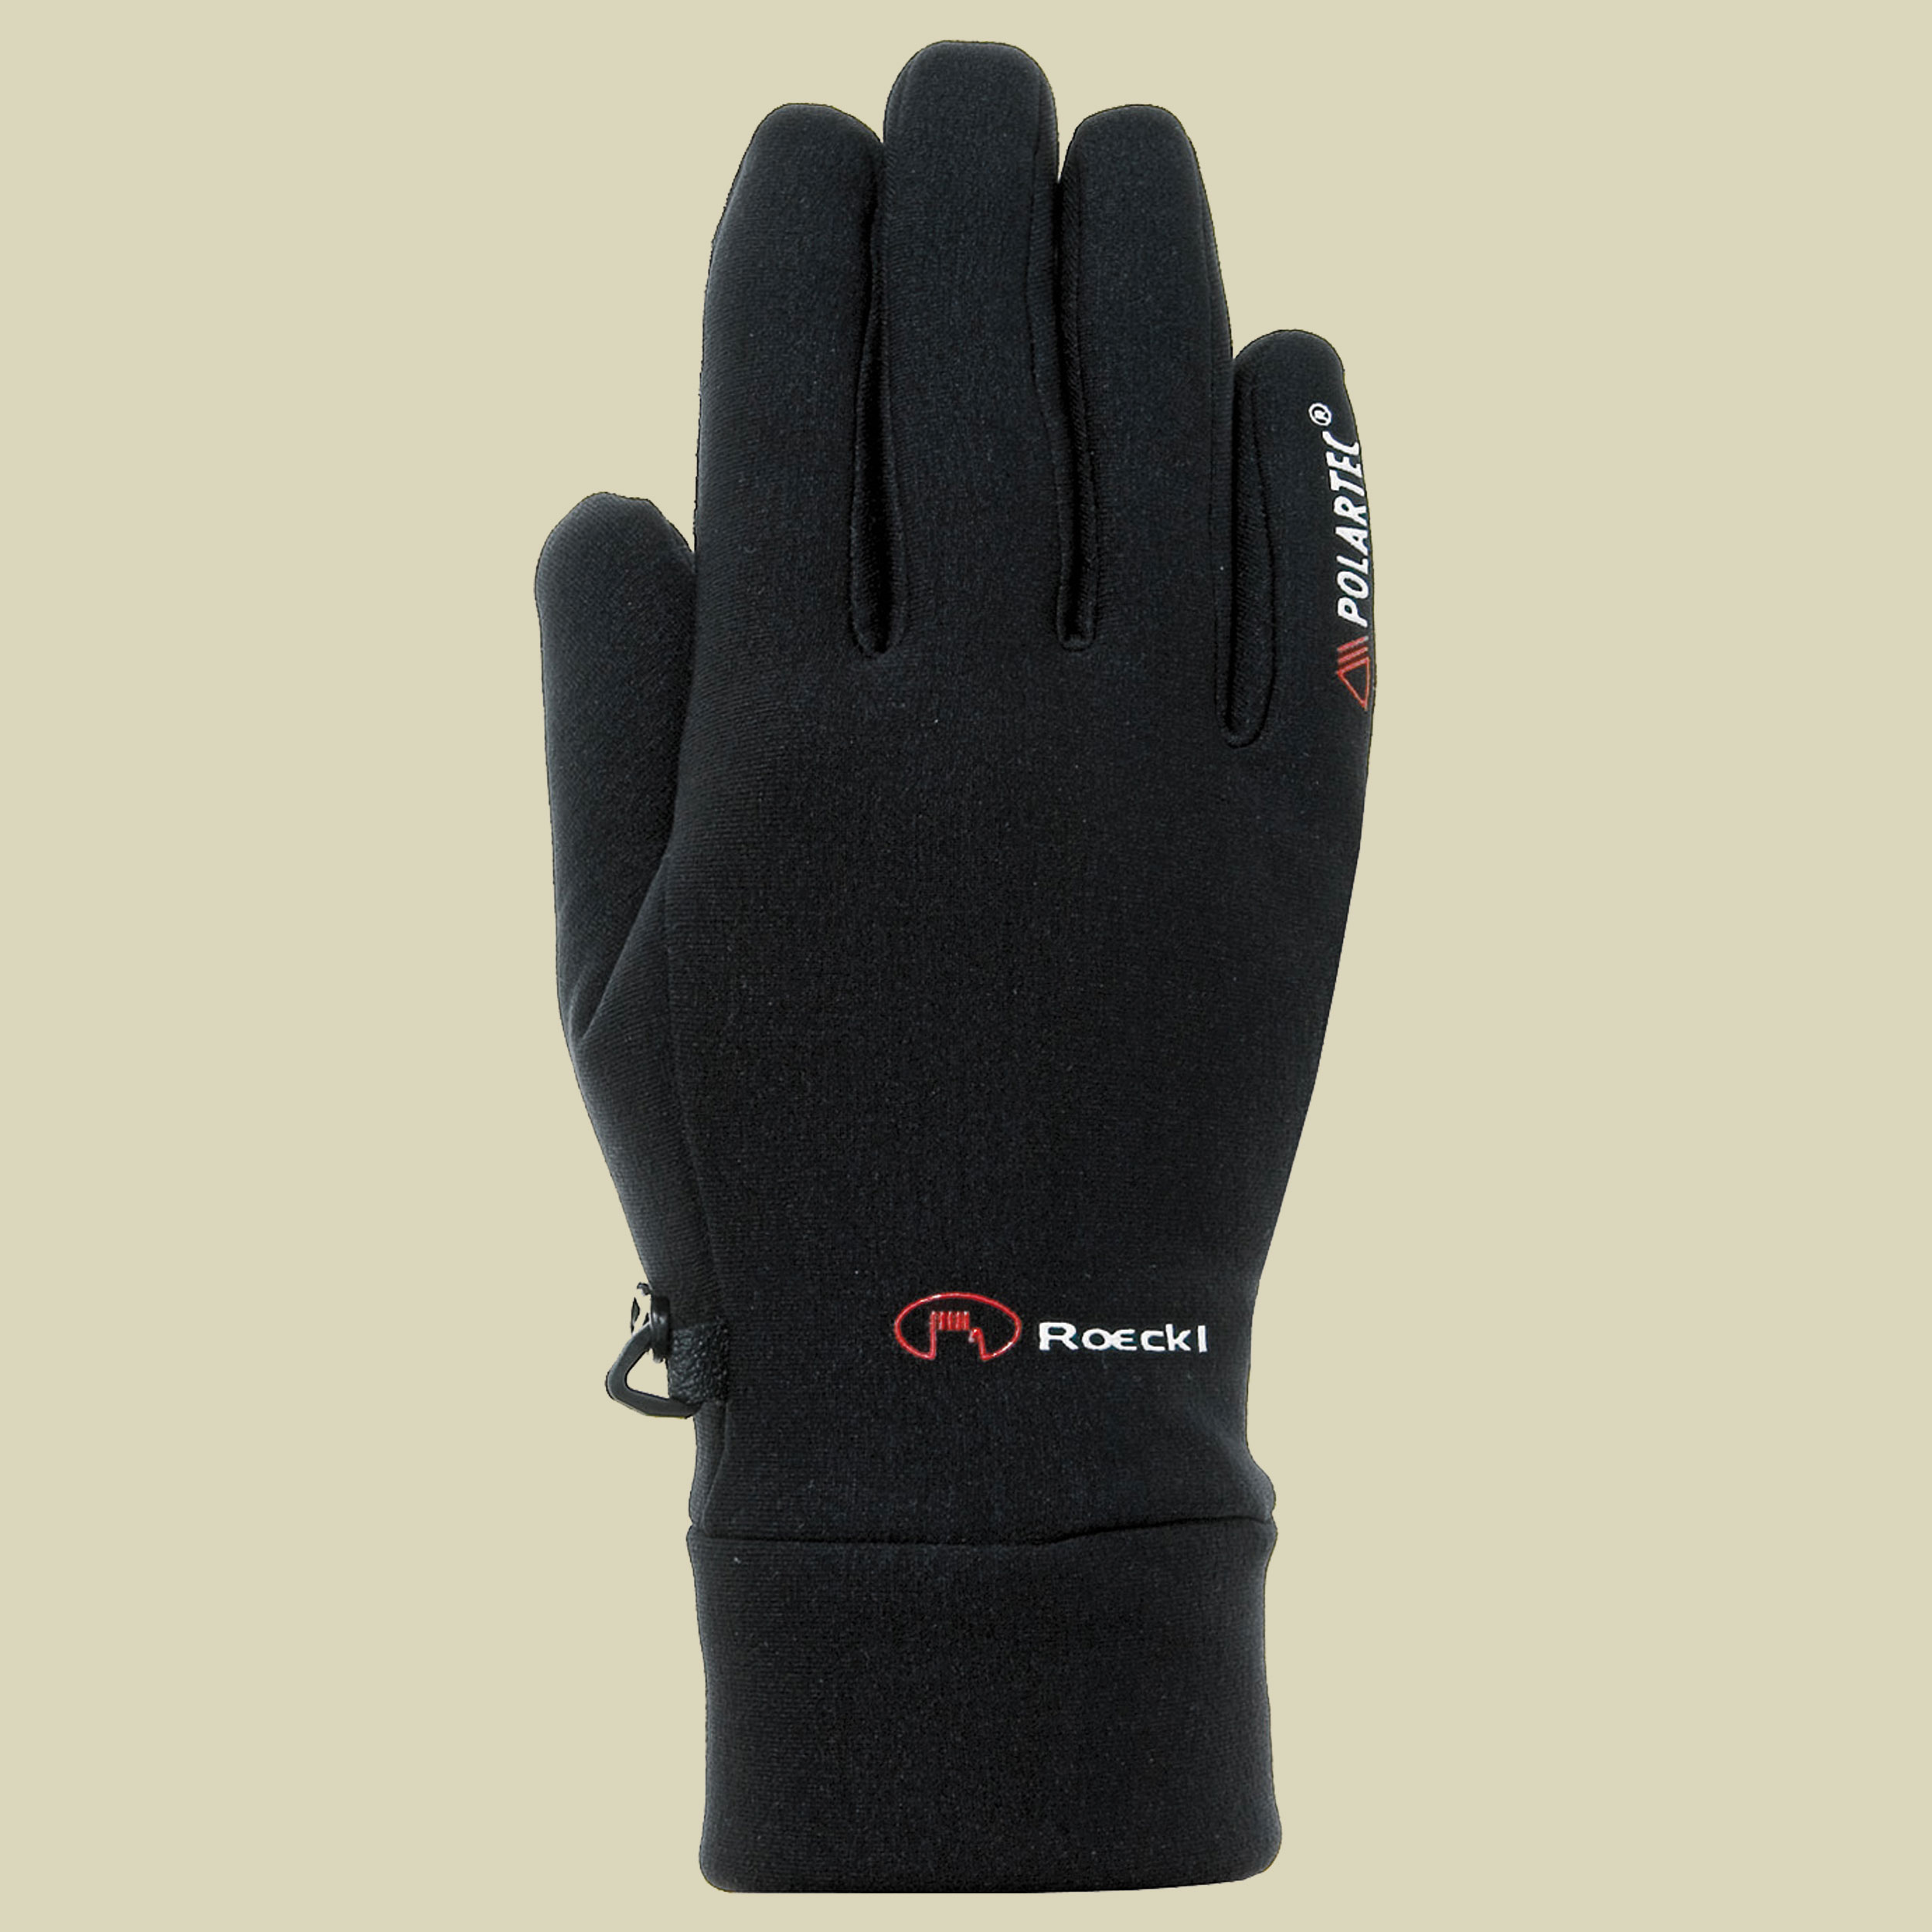 Katla Jr. Multisport Handschuh  Größe 4 Farbe schwarz